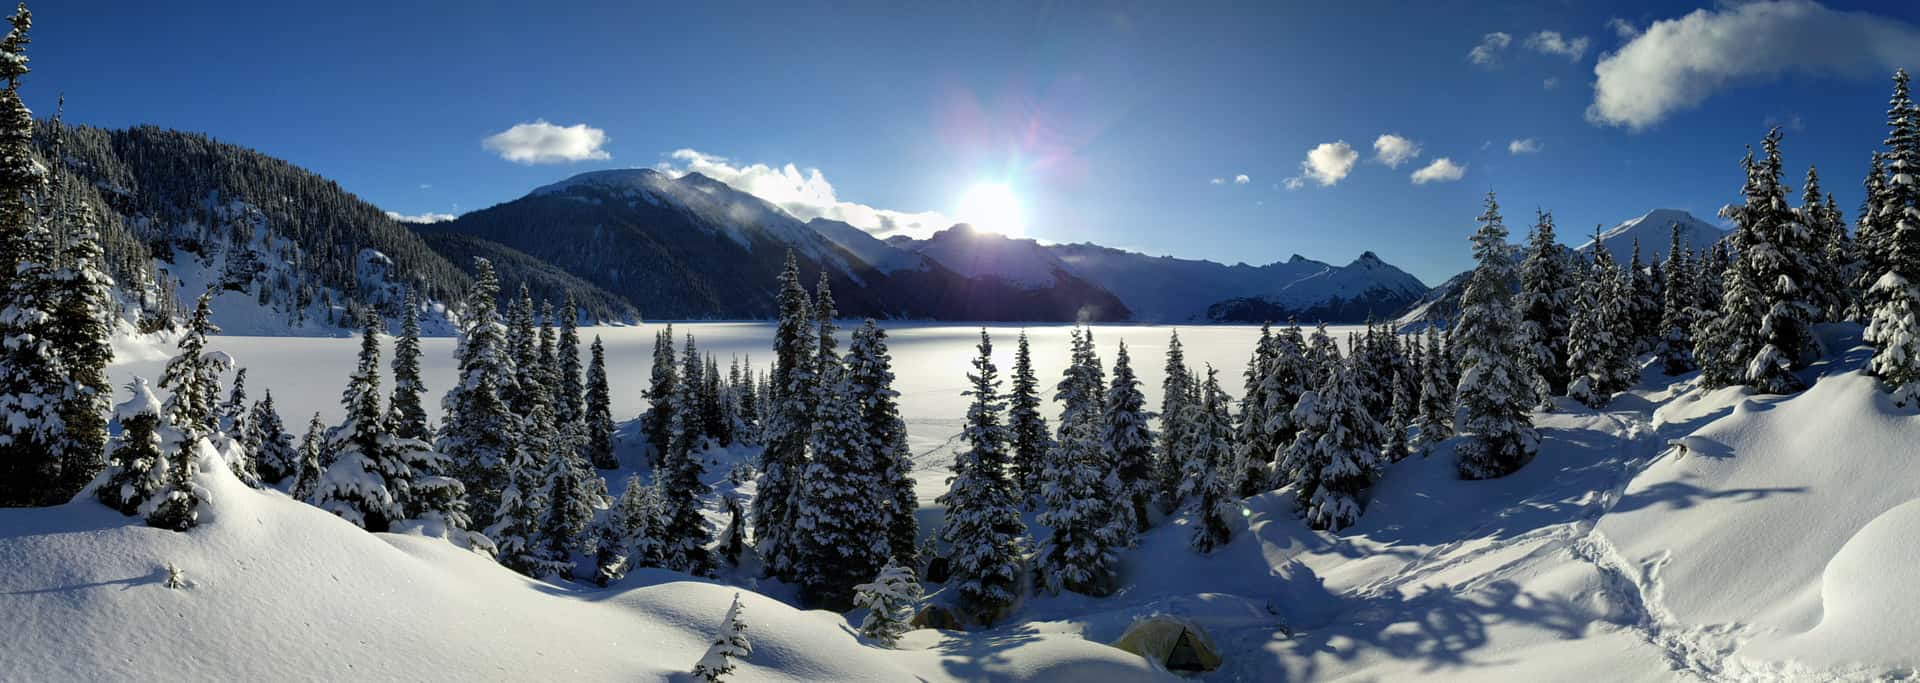 snow-covered campsites at frozen Garibaldi Lake